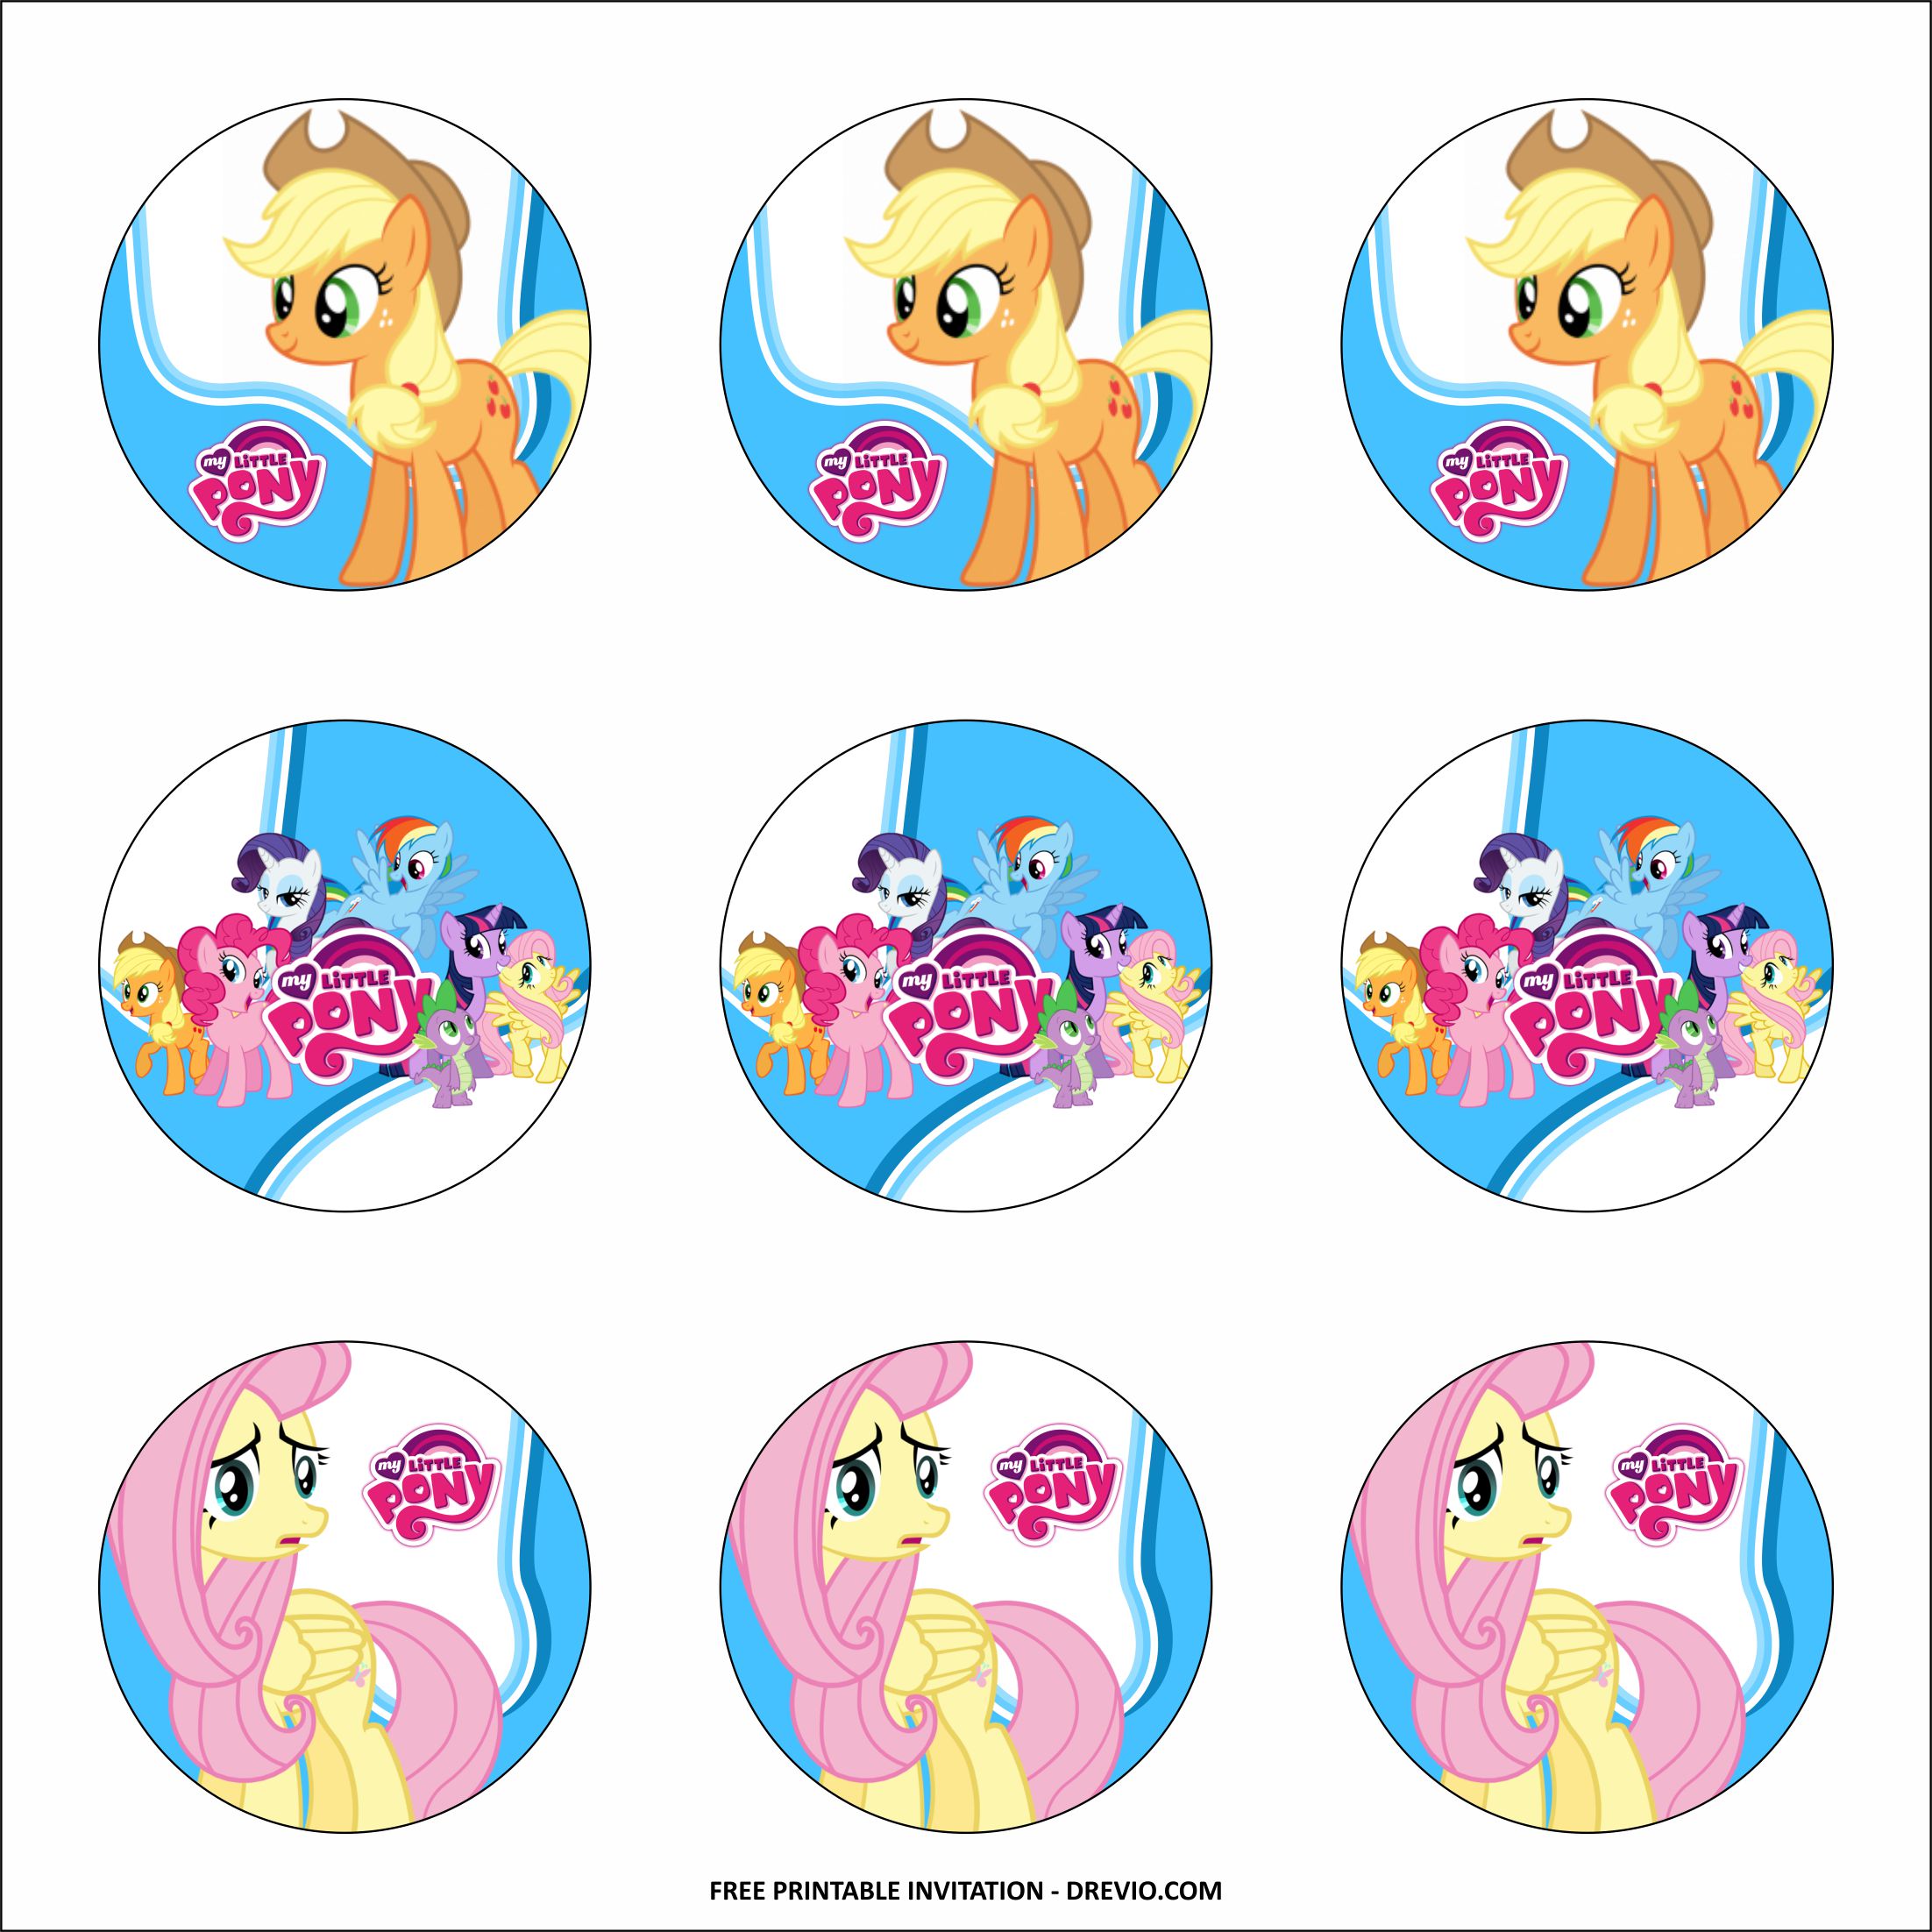  FREE PRINTABLE My Little Pony Birthday Party Kits Templates 